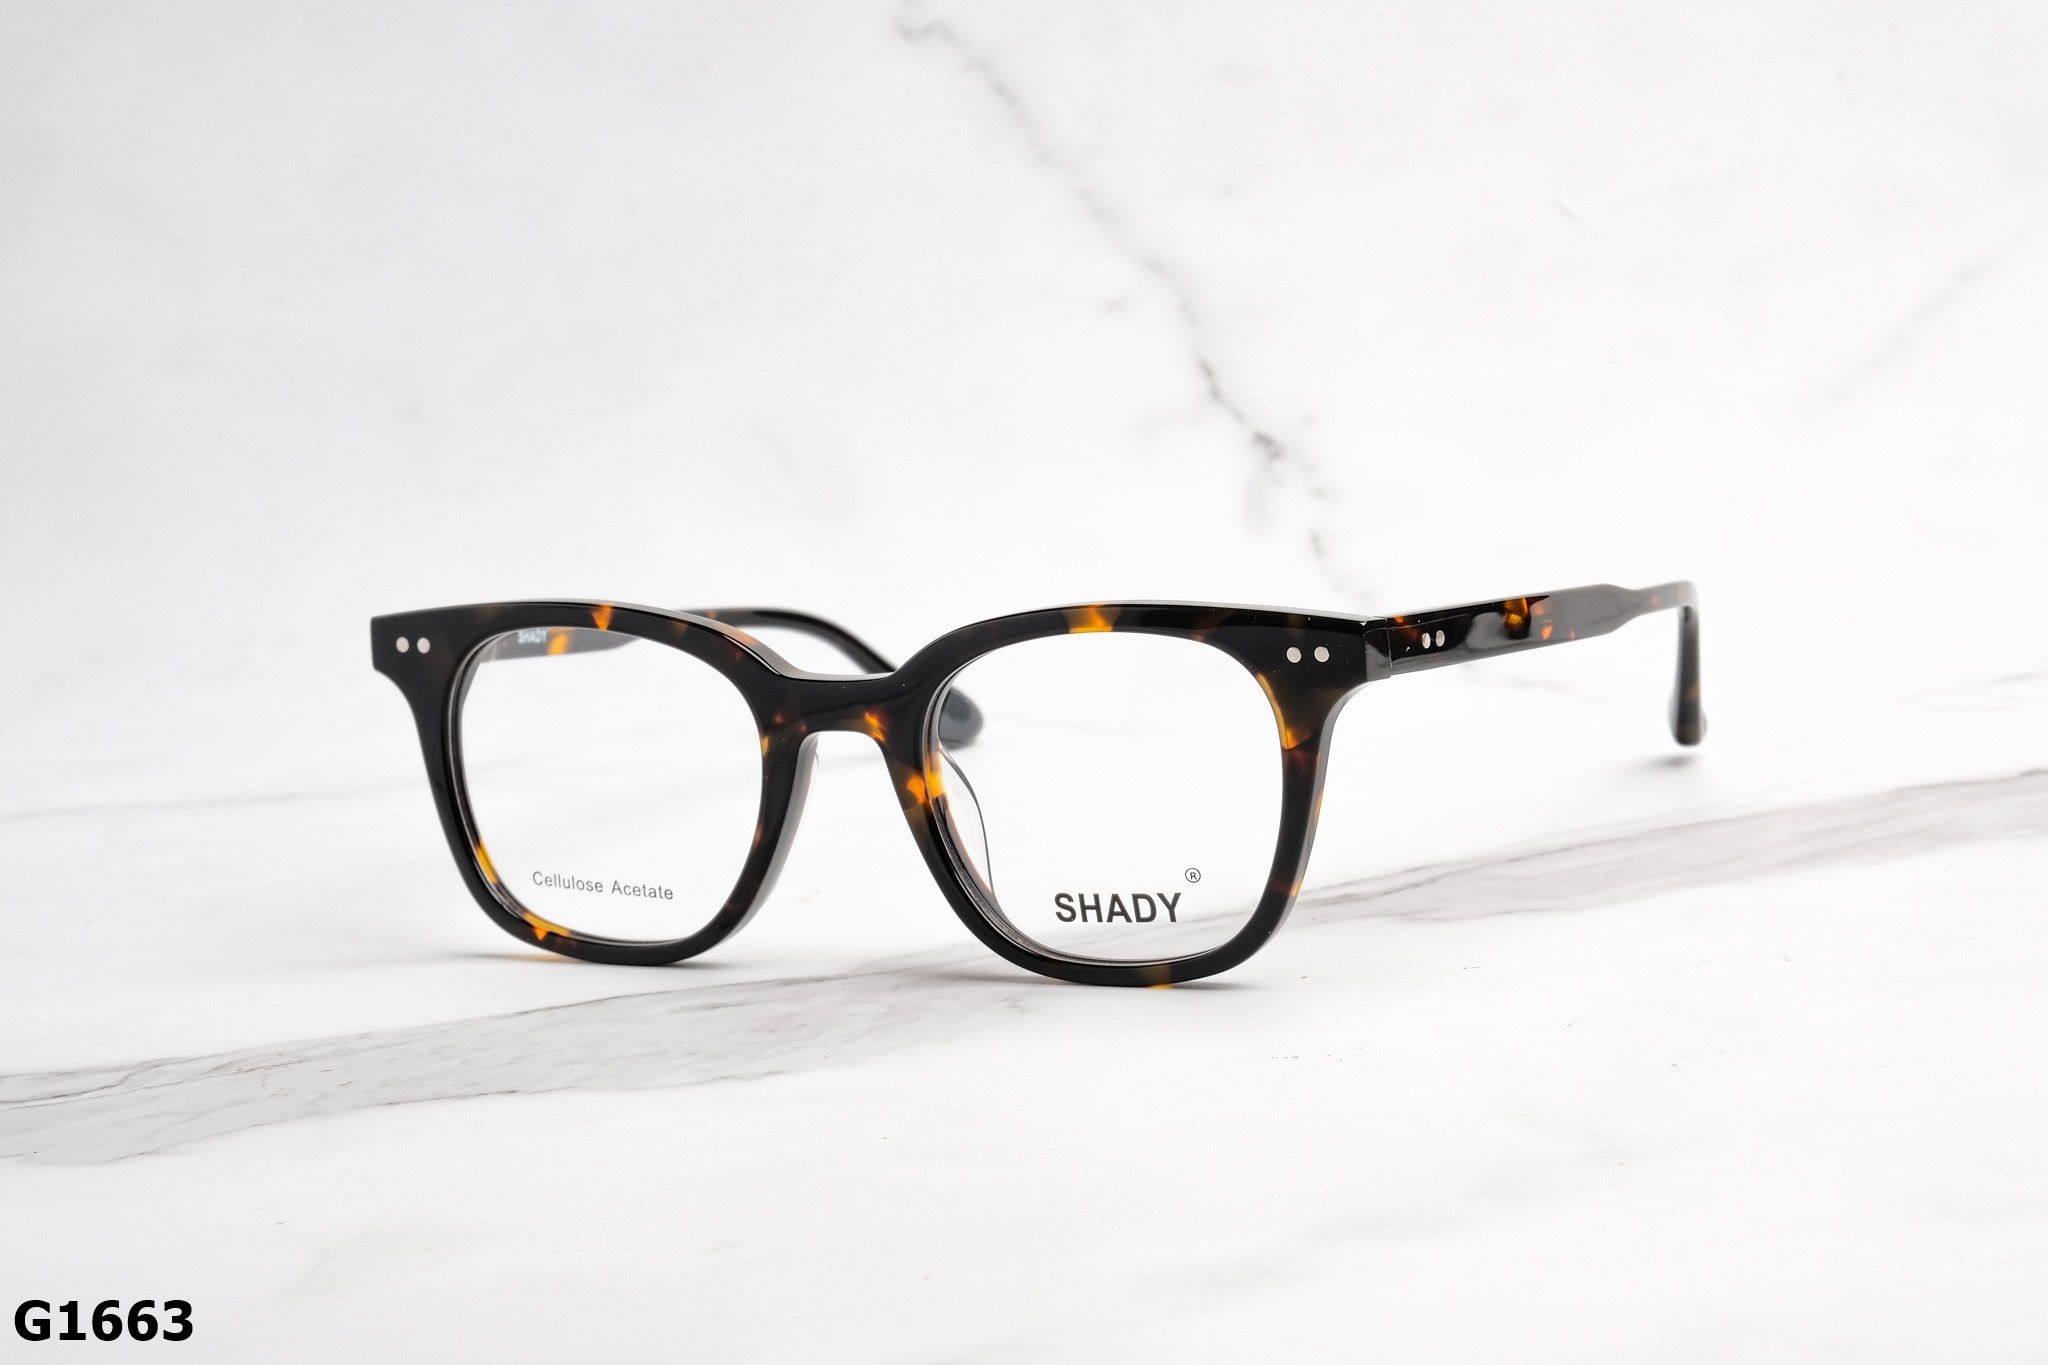  SHADY Eyewear - Glasses - G1663 